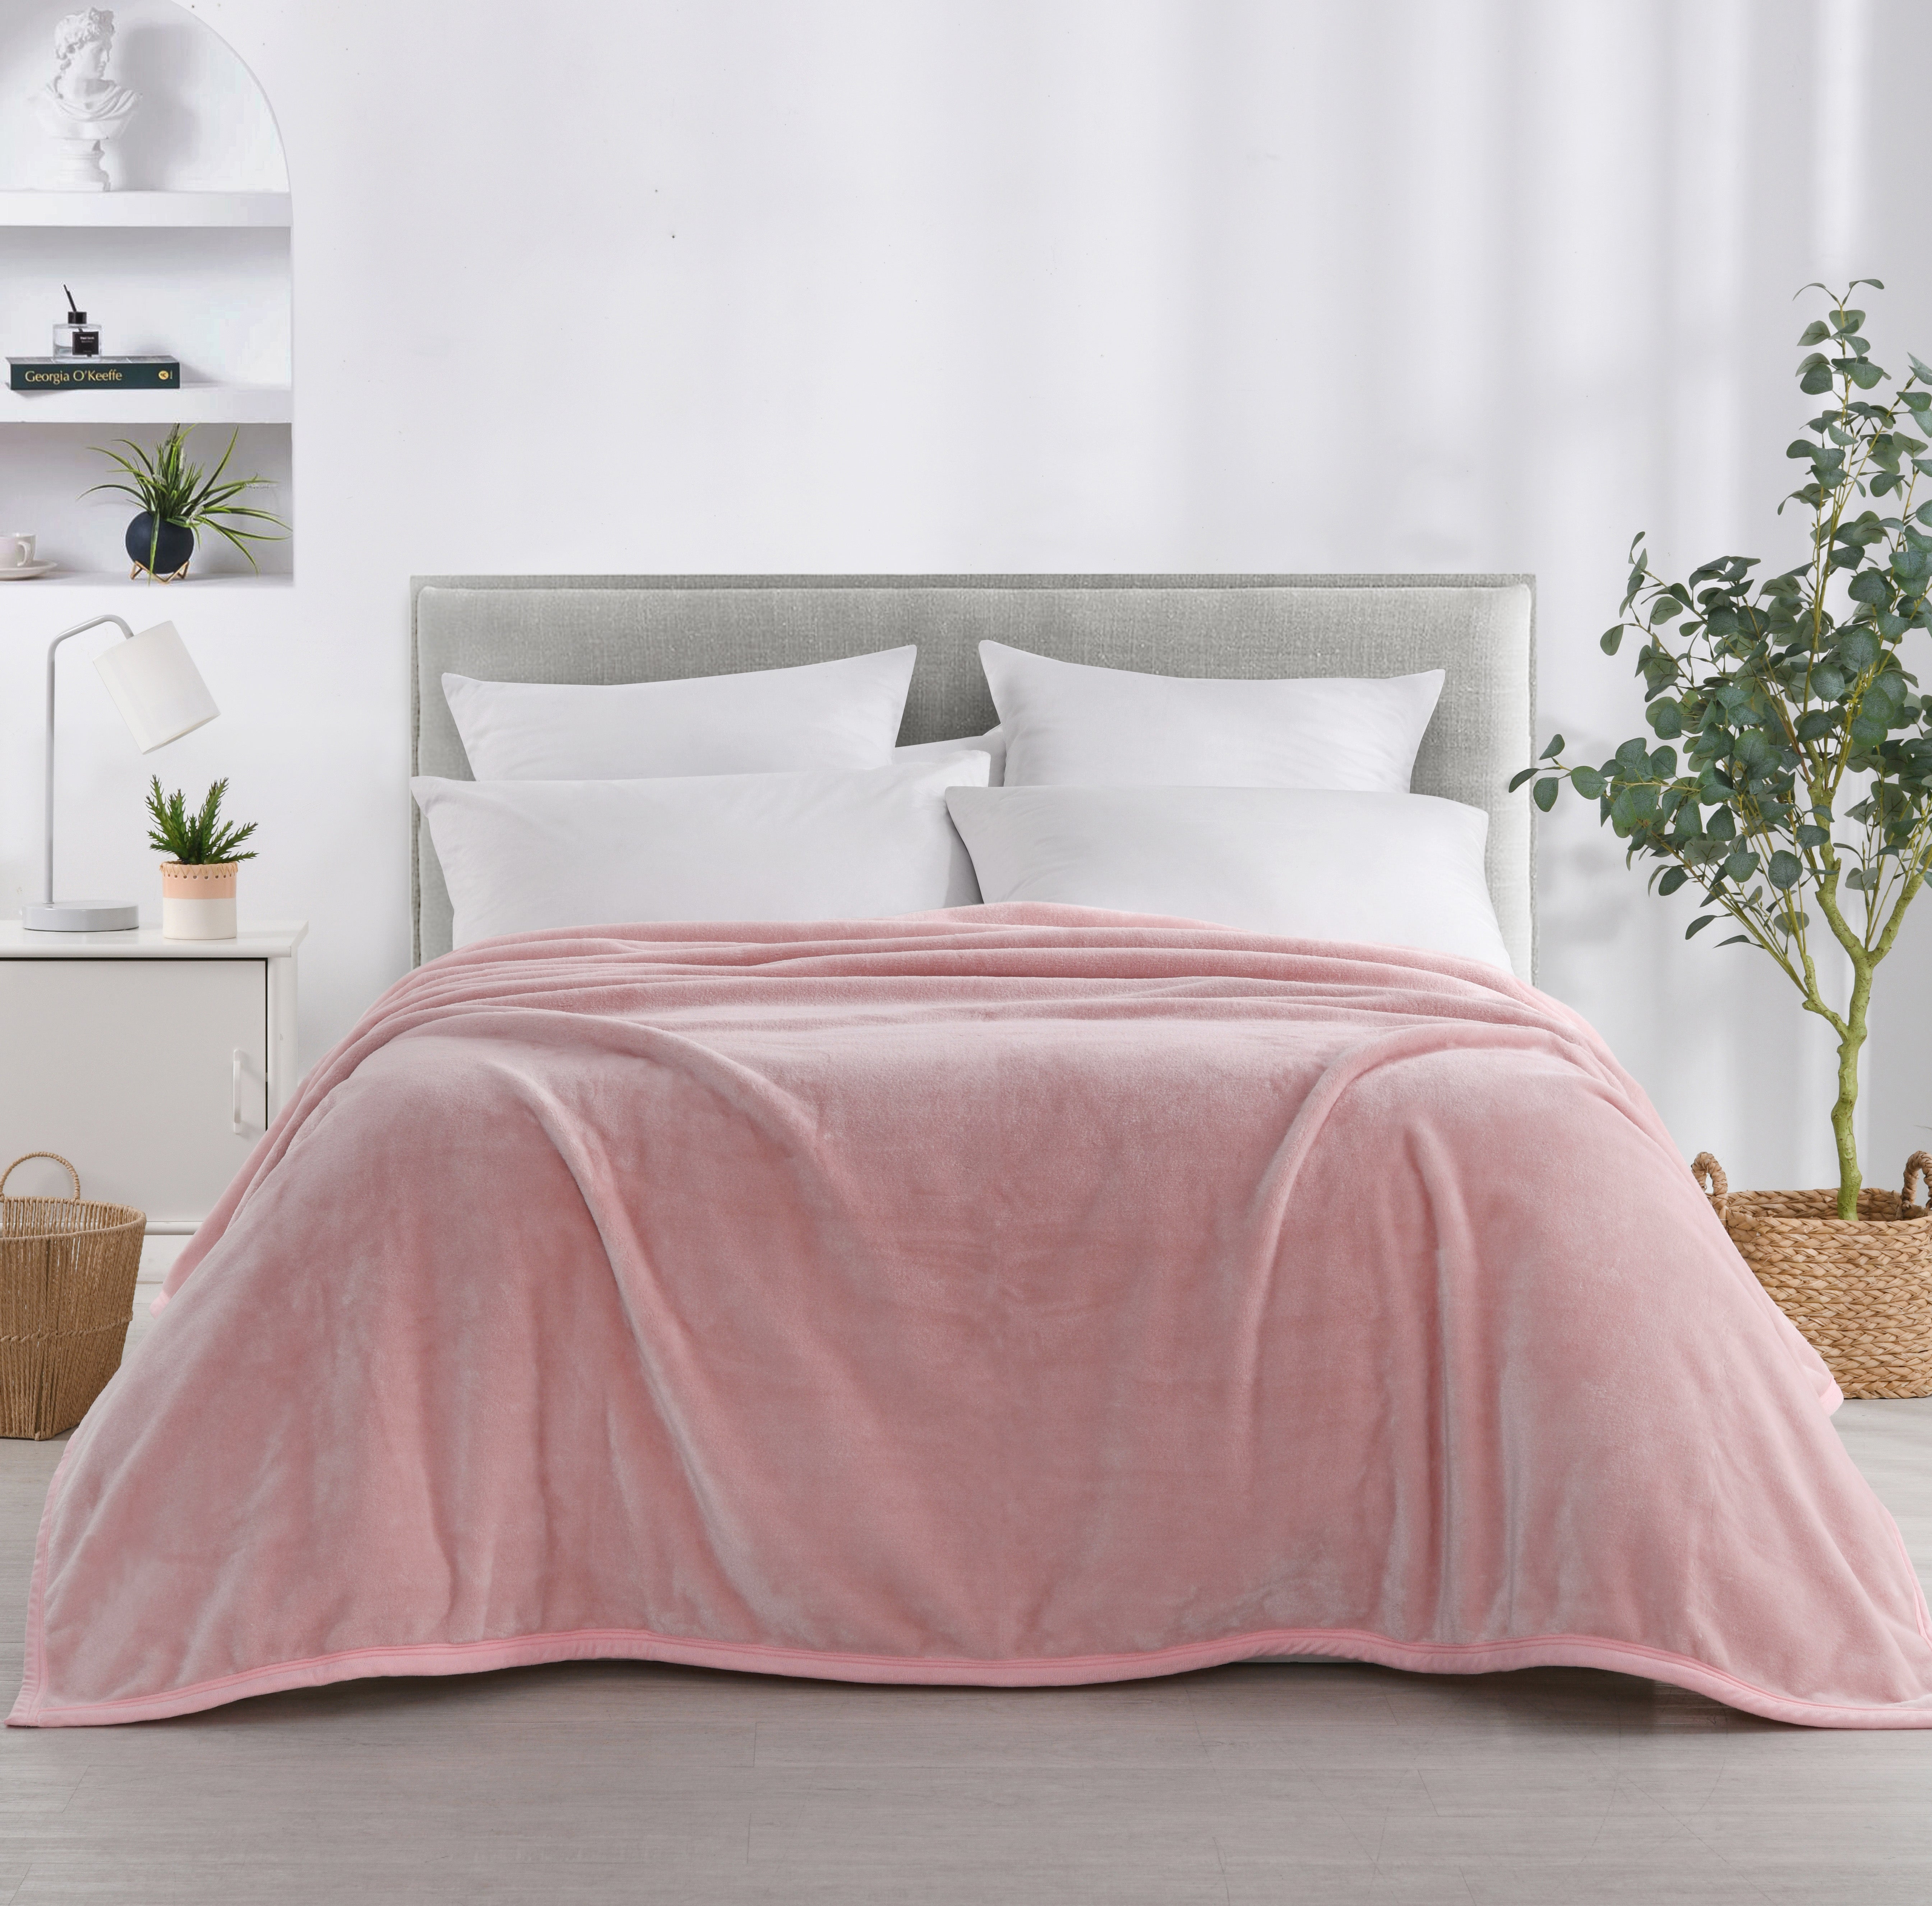 Esplanade Home Scarborough Mink Blanket 210cm x 220cm Light Pink